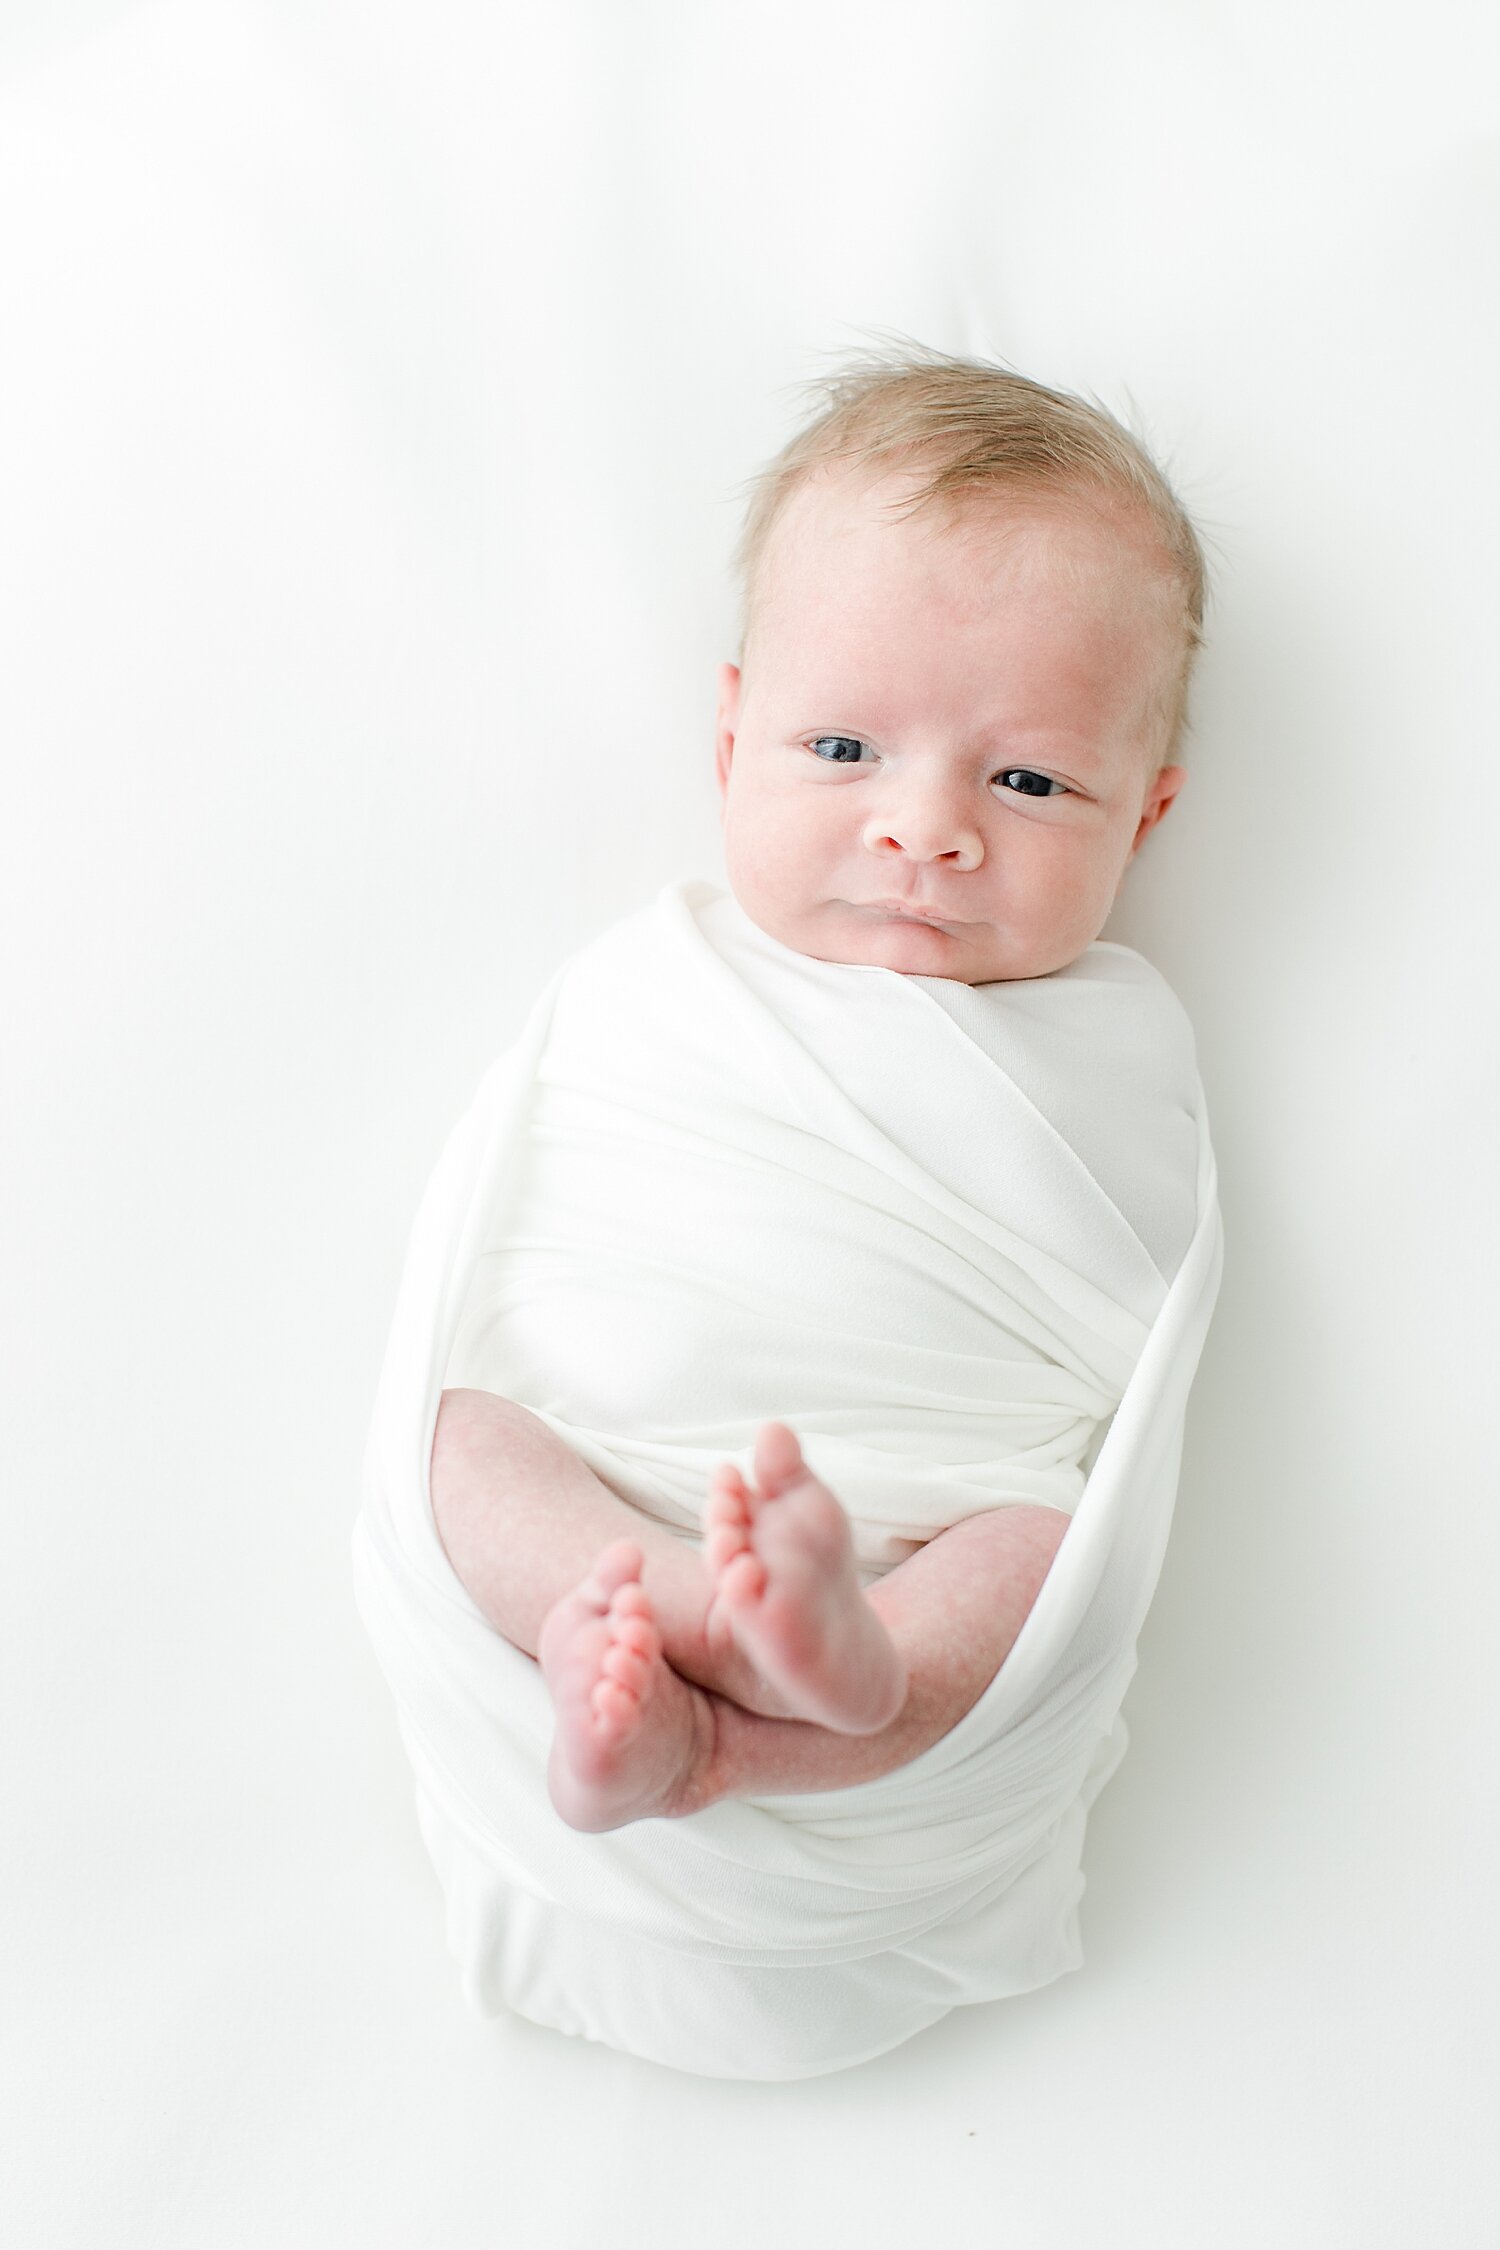 Newborn swaddled and awake for photoshoot with Kristin Wood Photography.